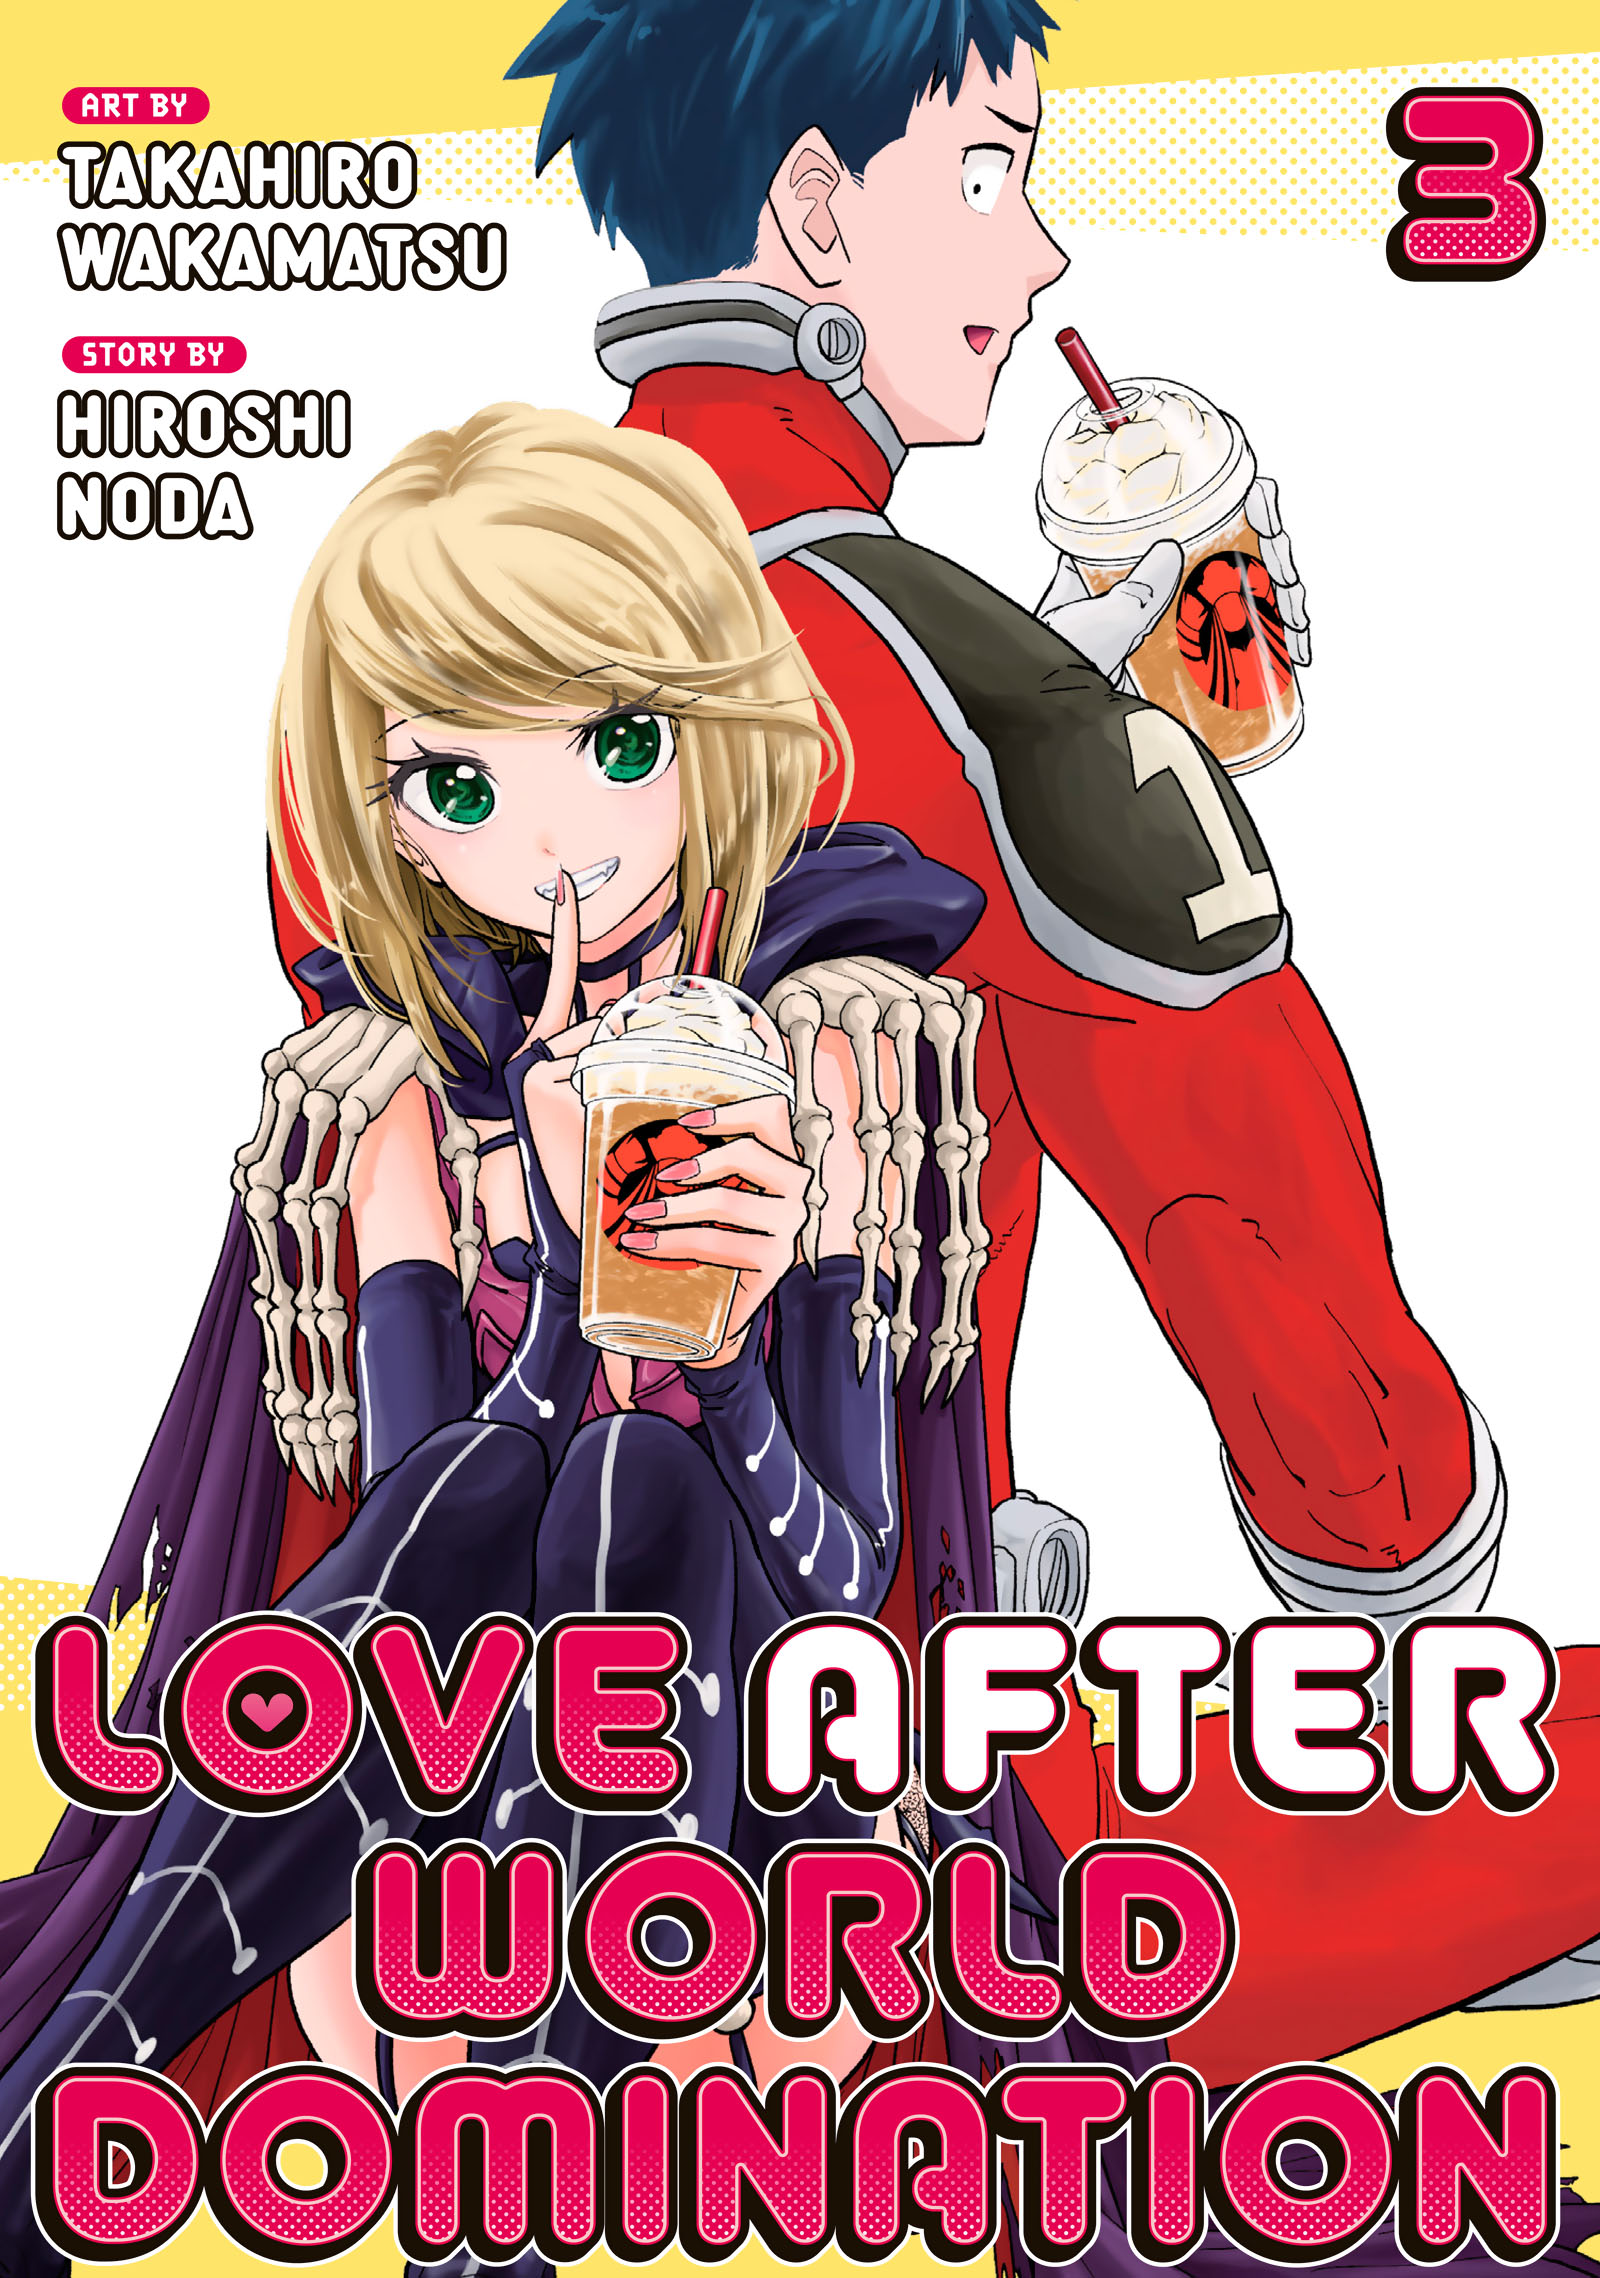 Read Love After World Domination Manga Online Free - Manganelo